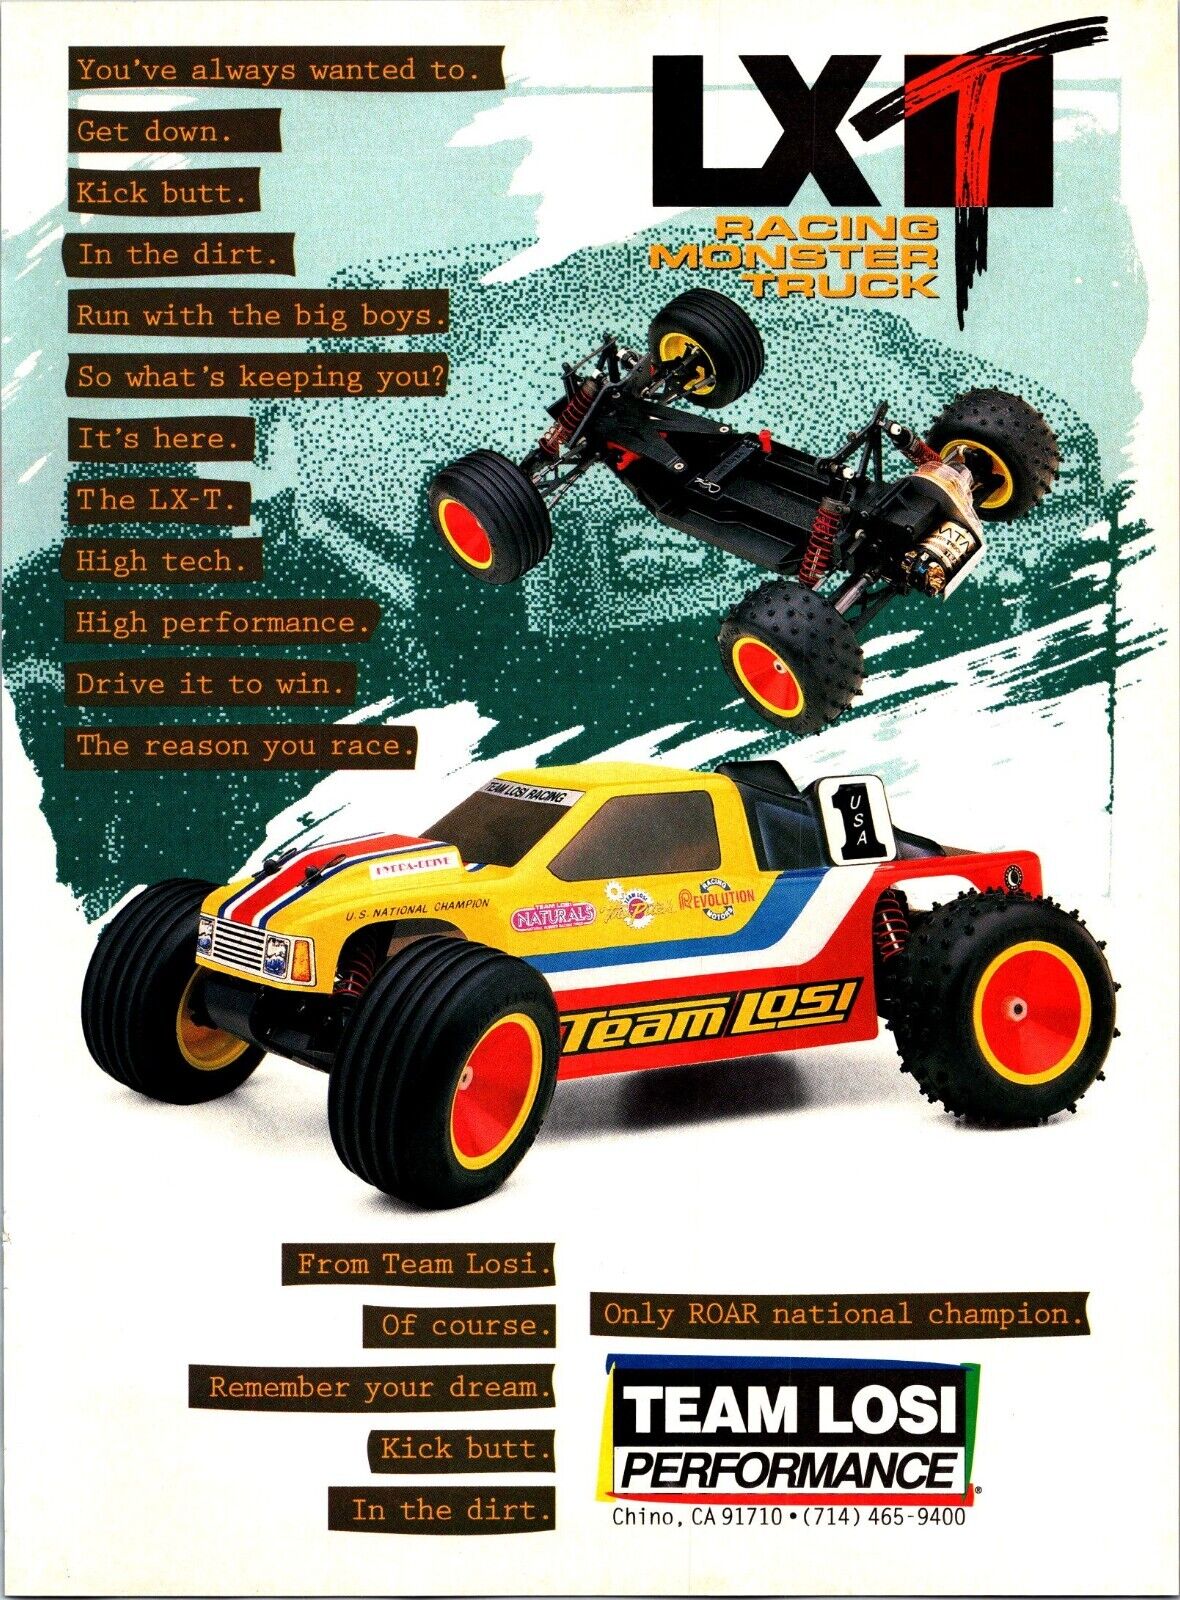 Team Losi LXT Print Ad Wall Art Decor Racing Monster Truck